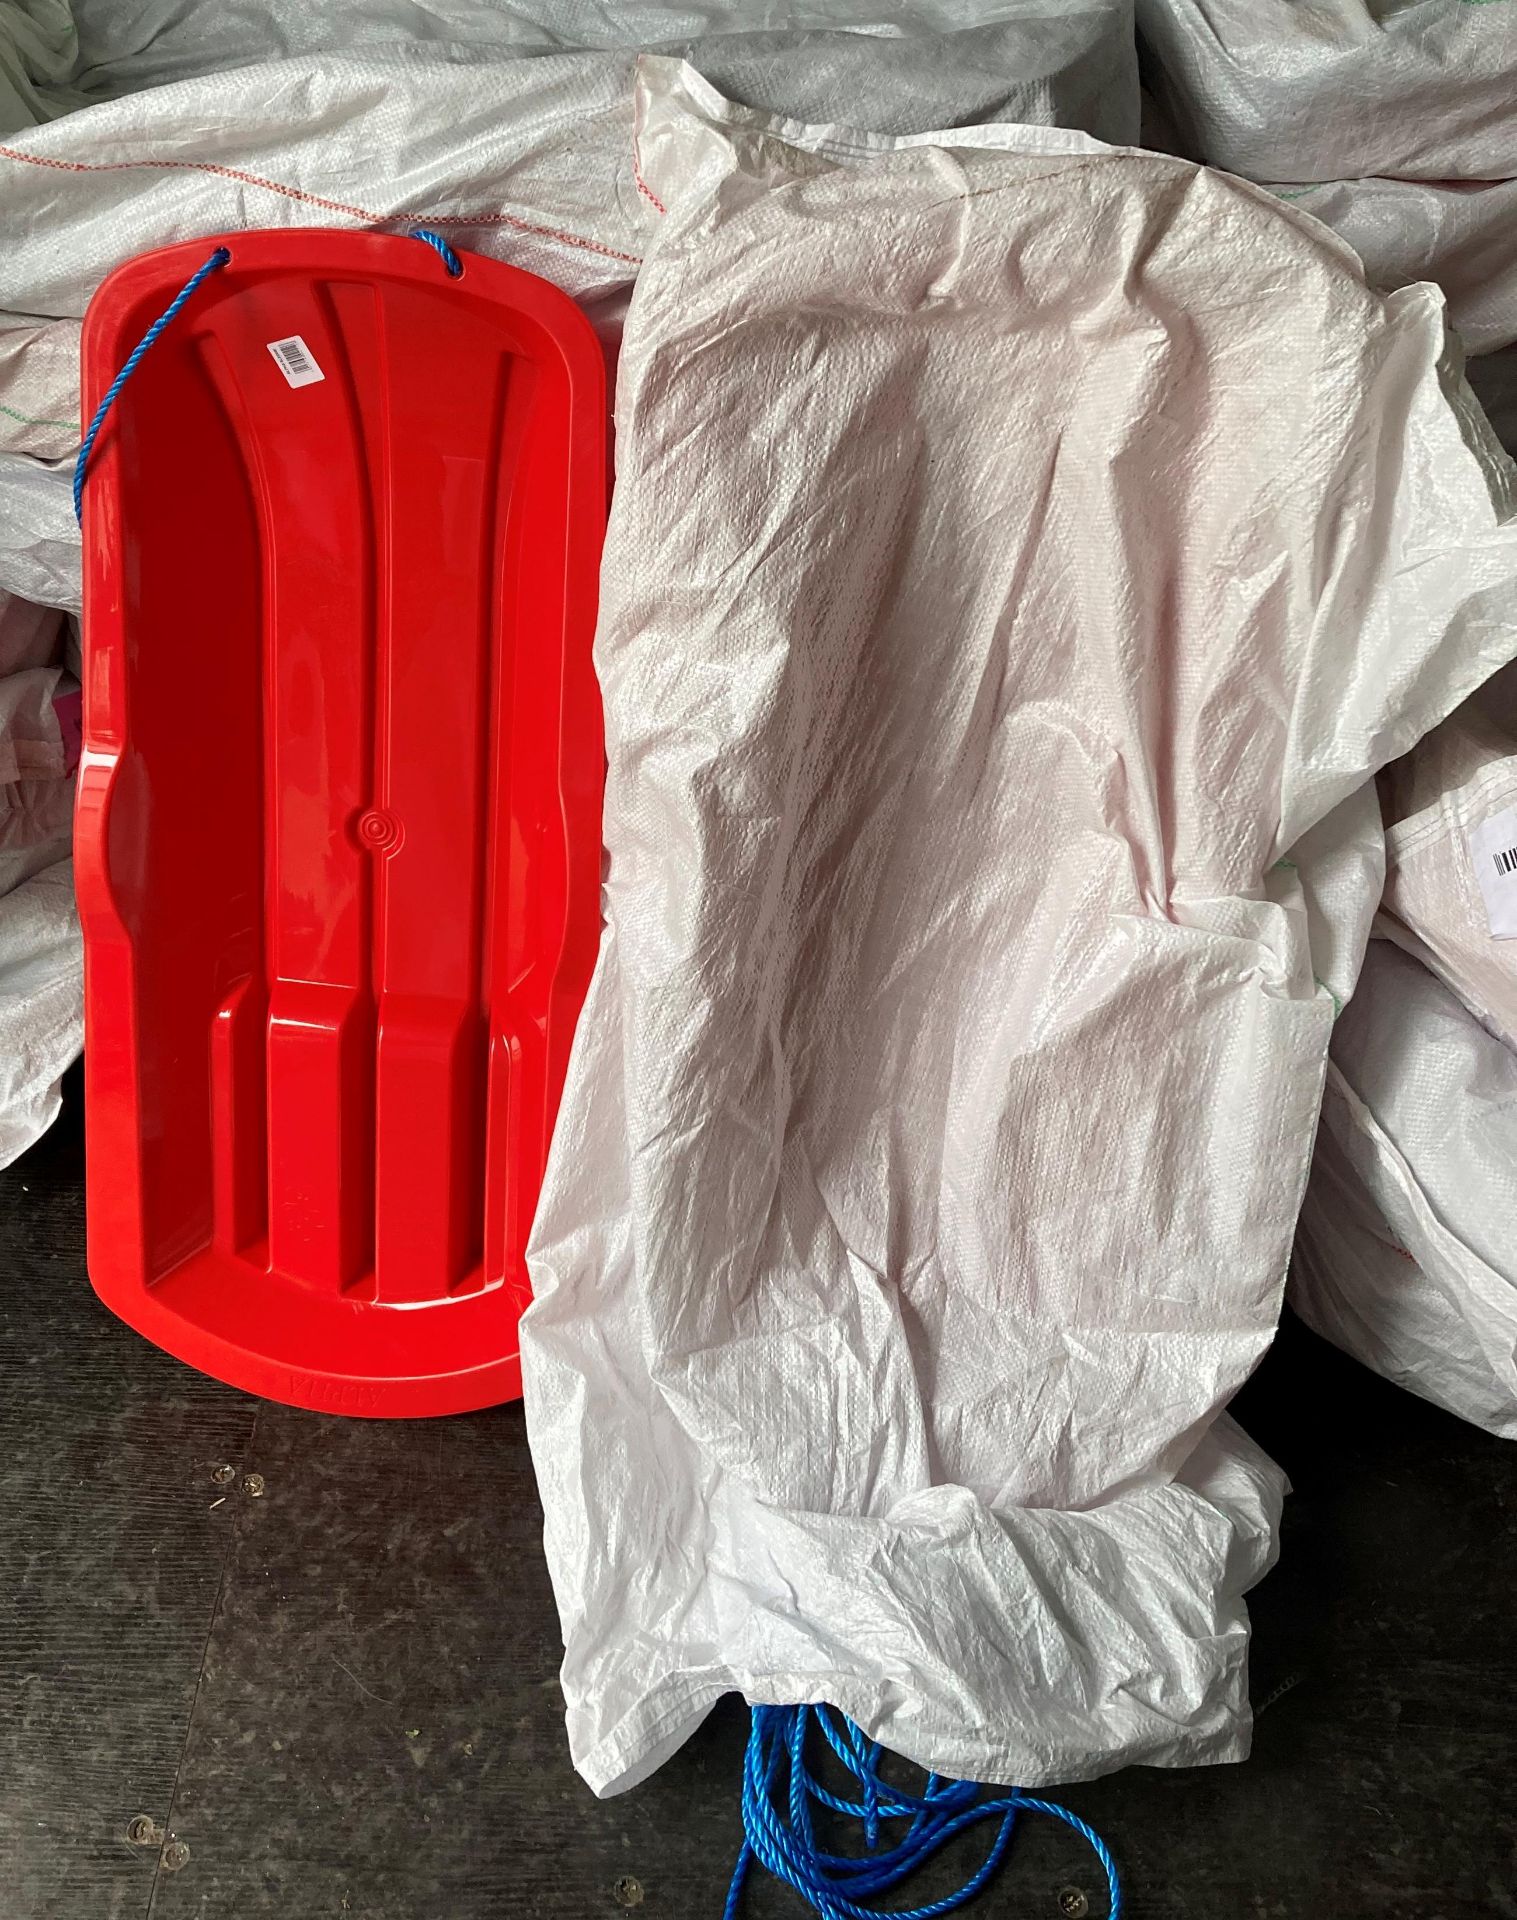 20 x Asra Alpha children's sledges - red (2 x sacks) (saleroom location: container 9) - Image 4 of 4